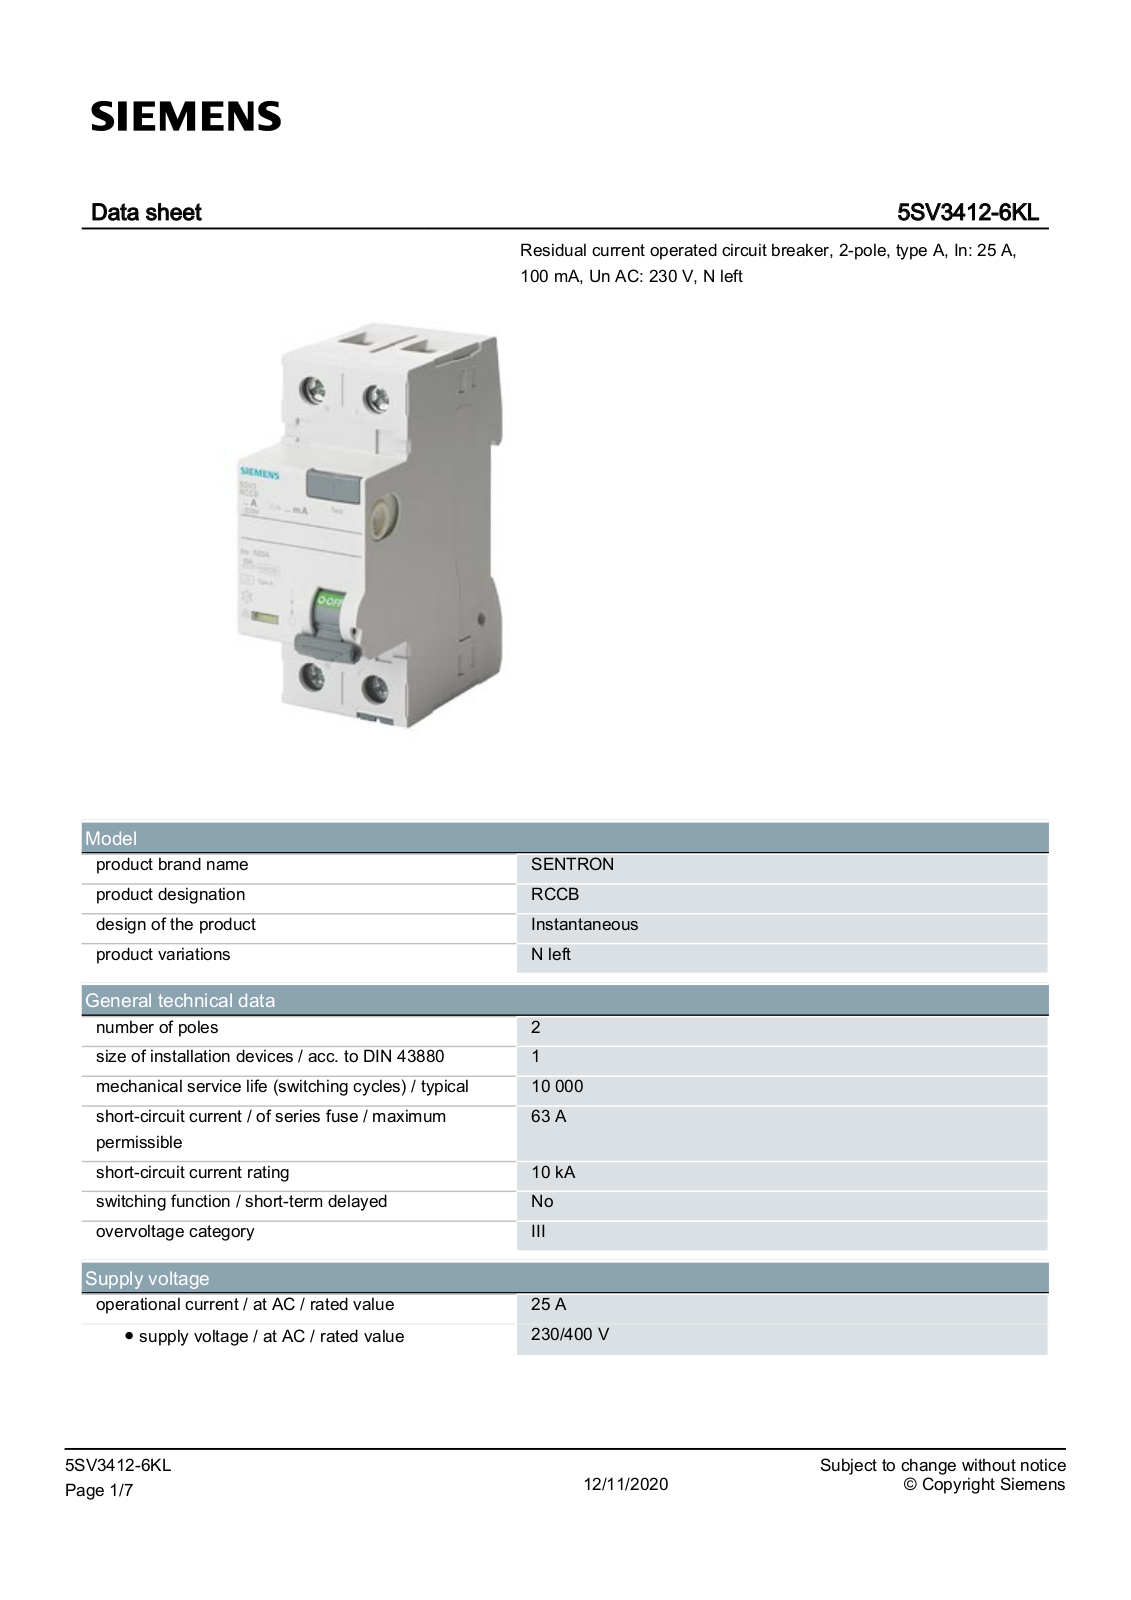 Siemens 5SV3412-6KL data sheet